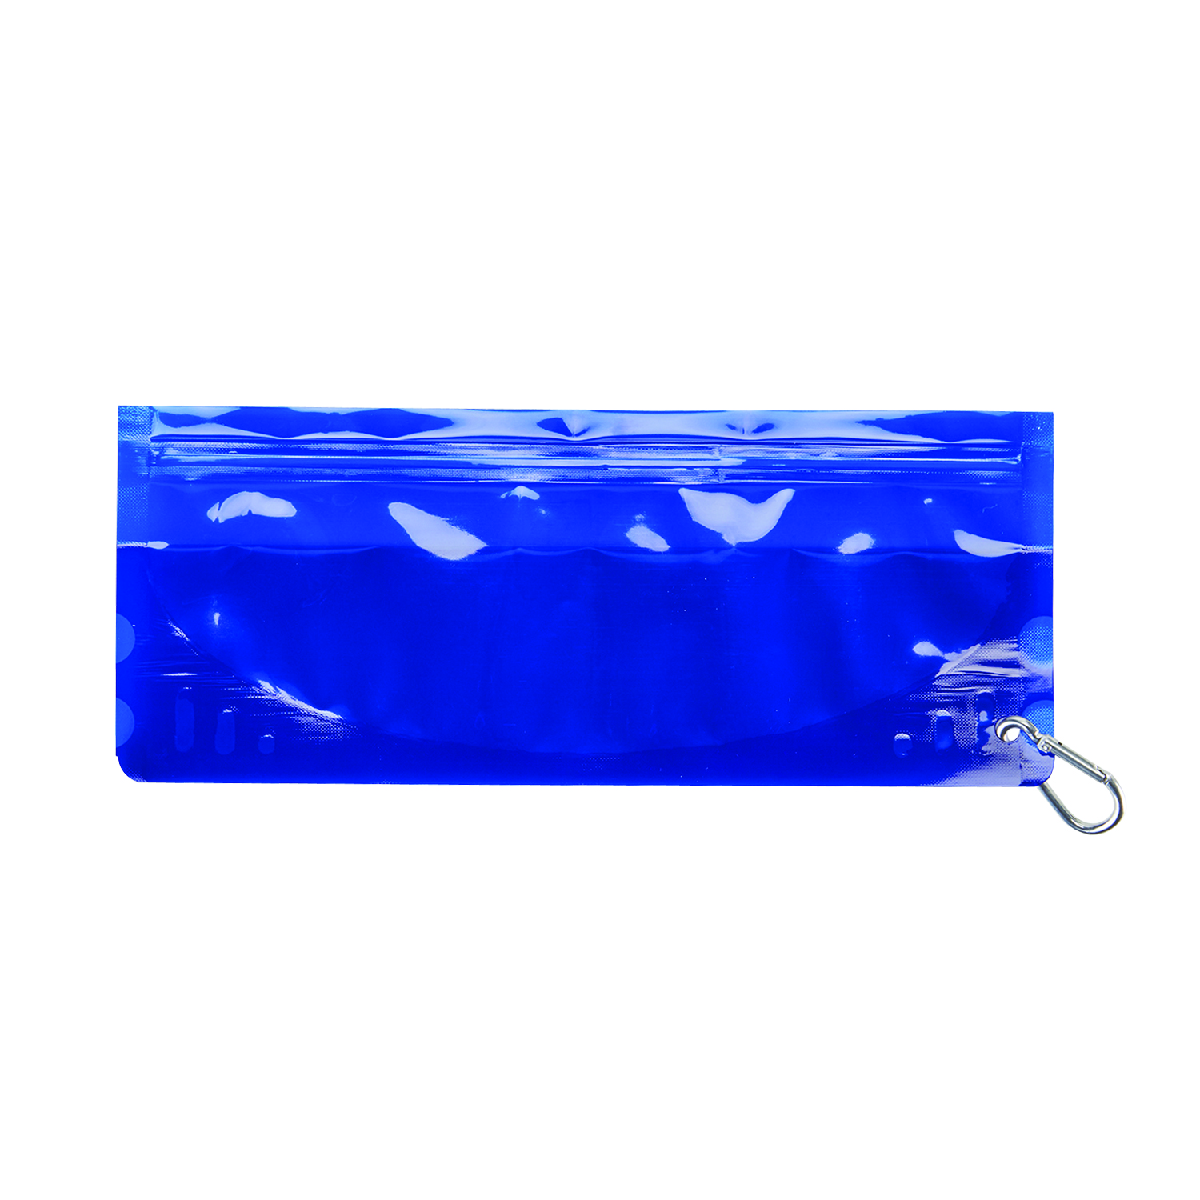 Translucent Blue Fold It Pet Bowl